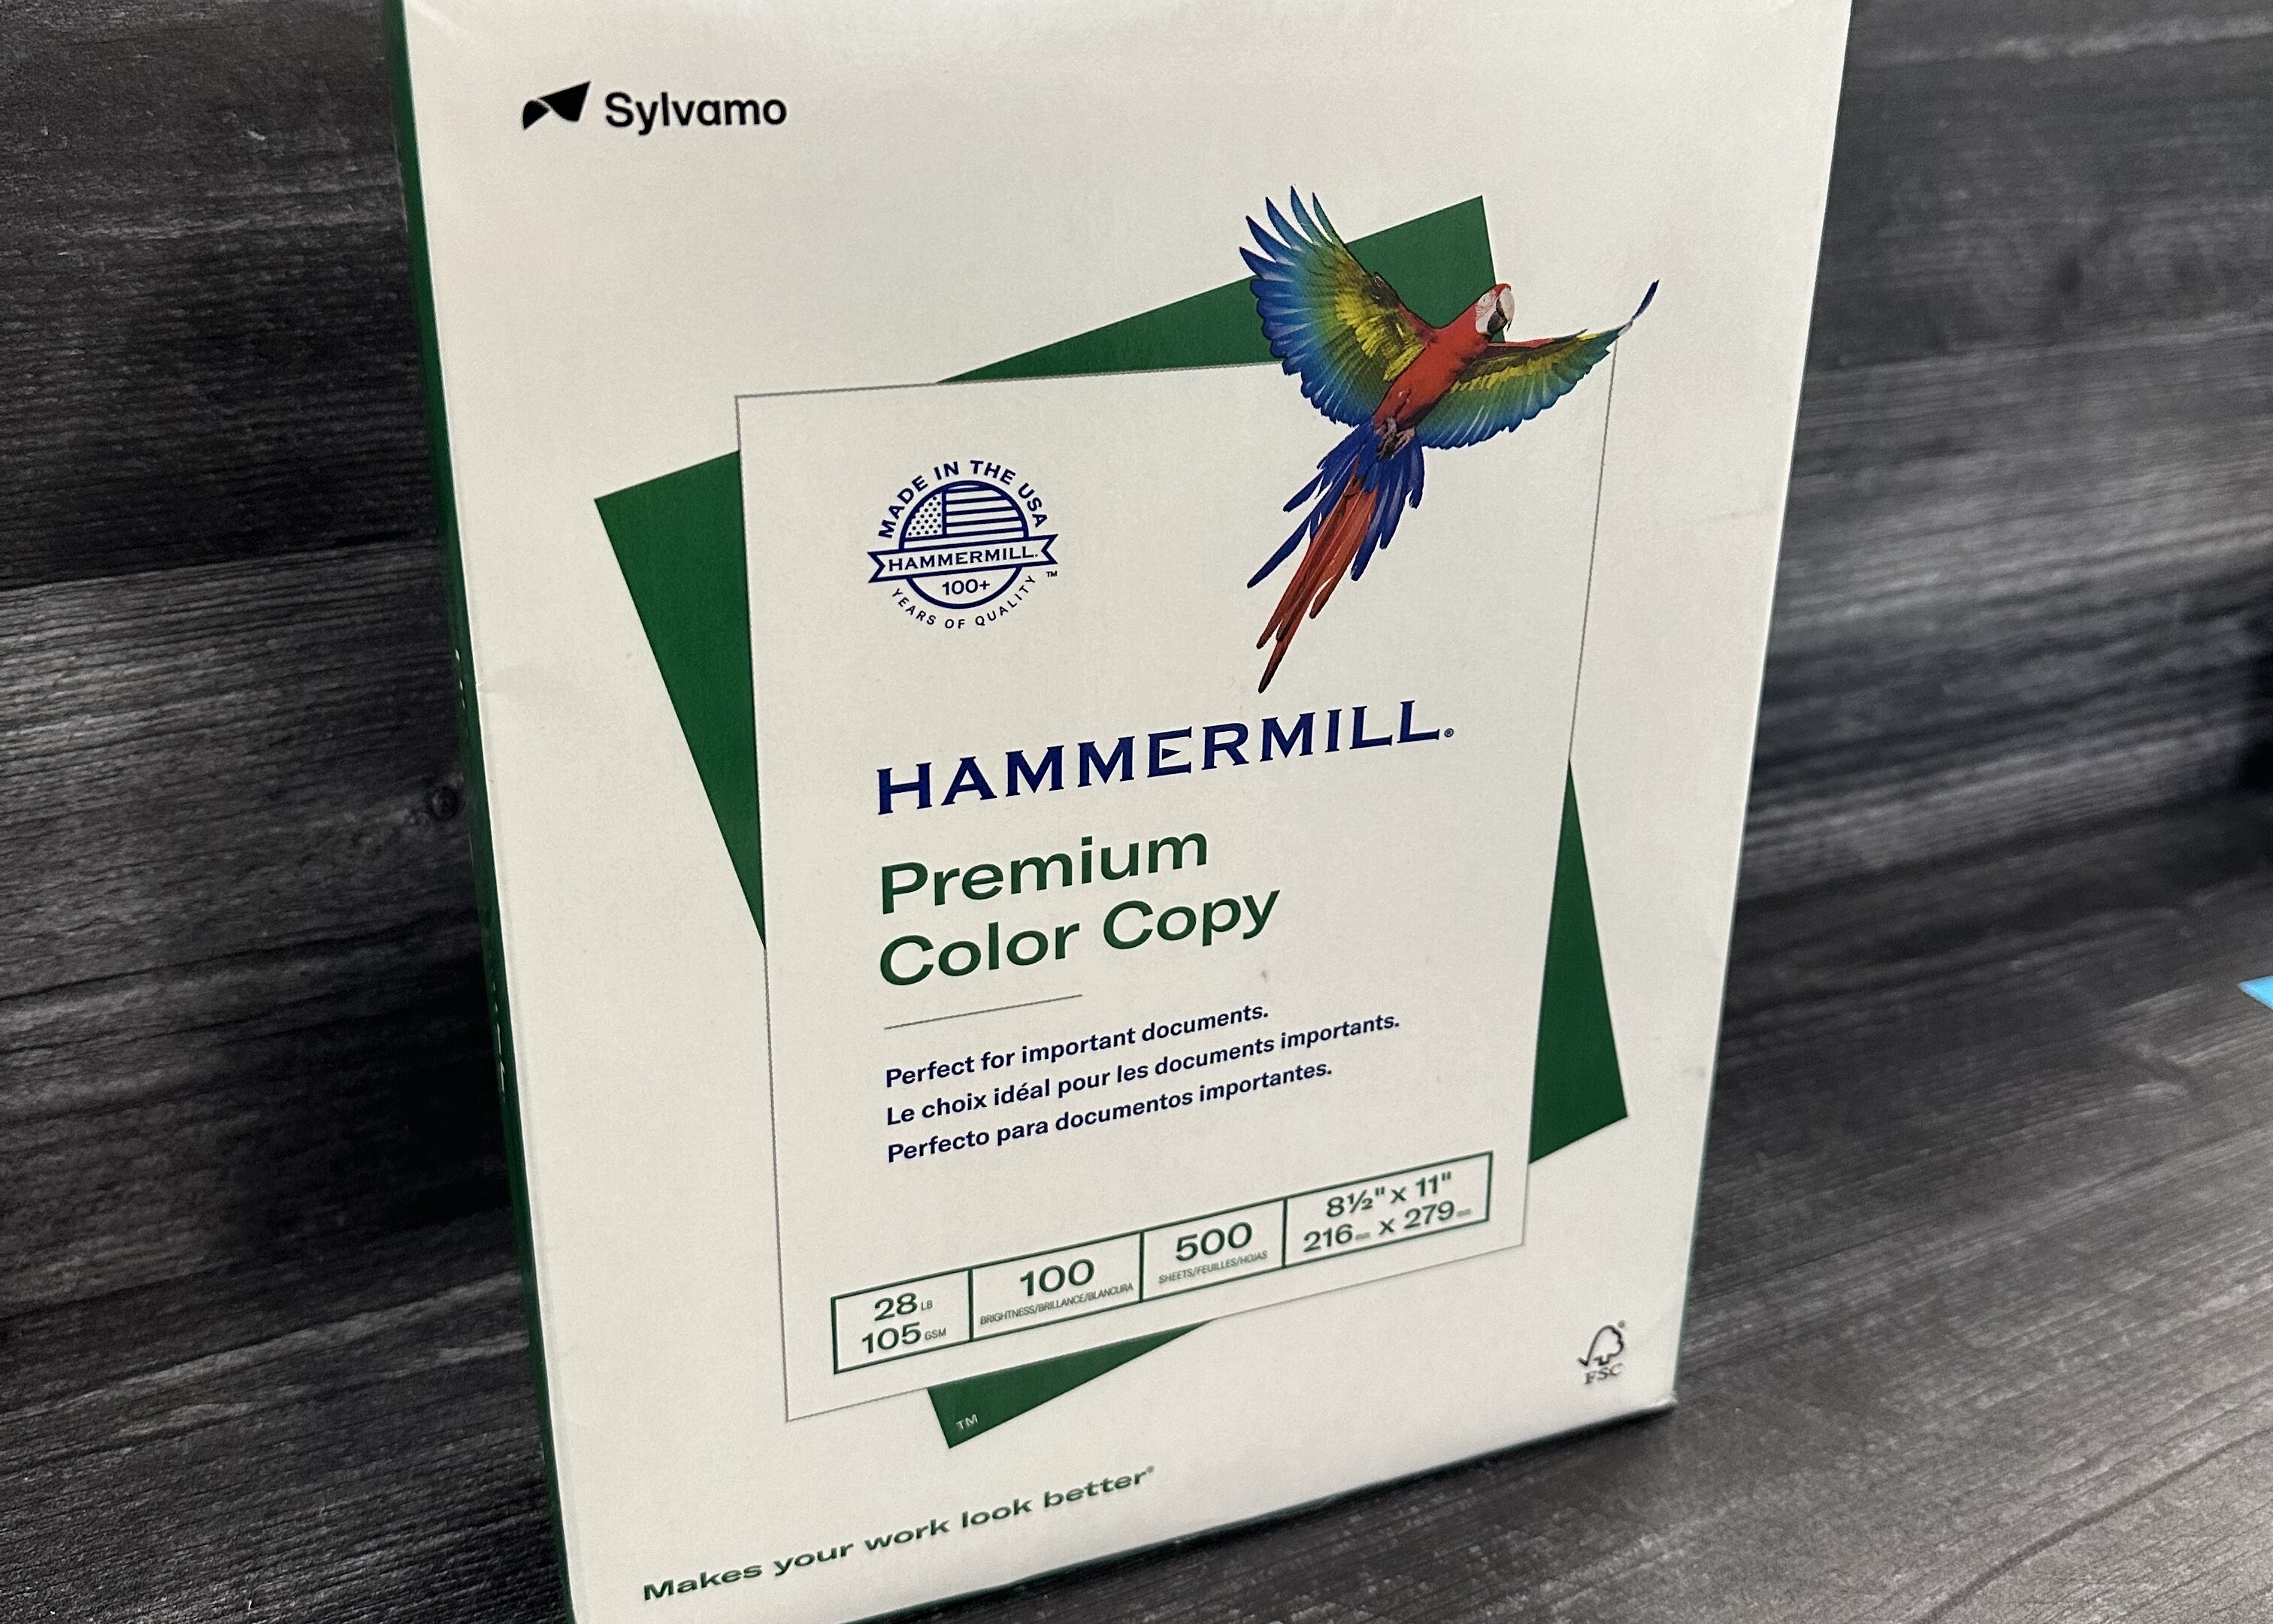 Ream of Hammermill Premium Color Copy Paper